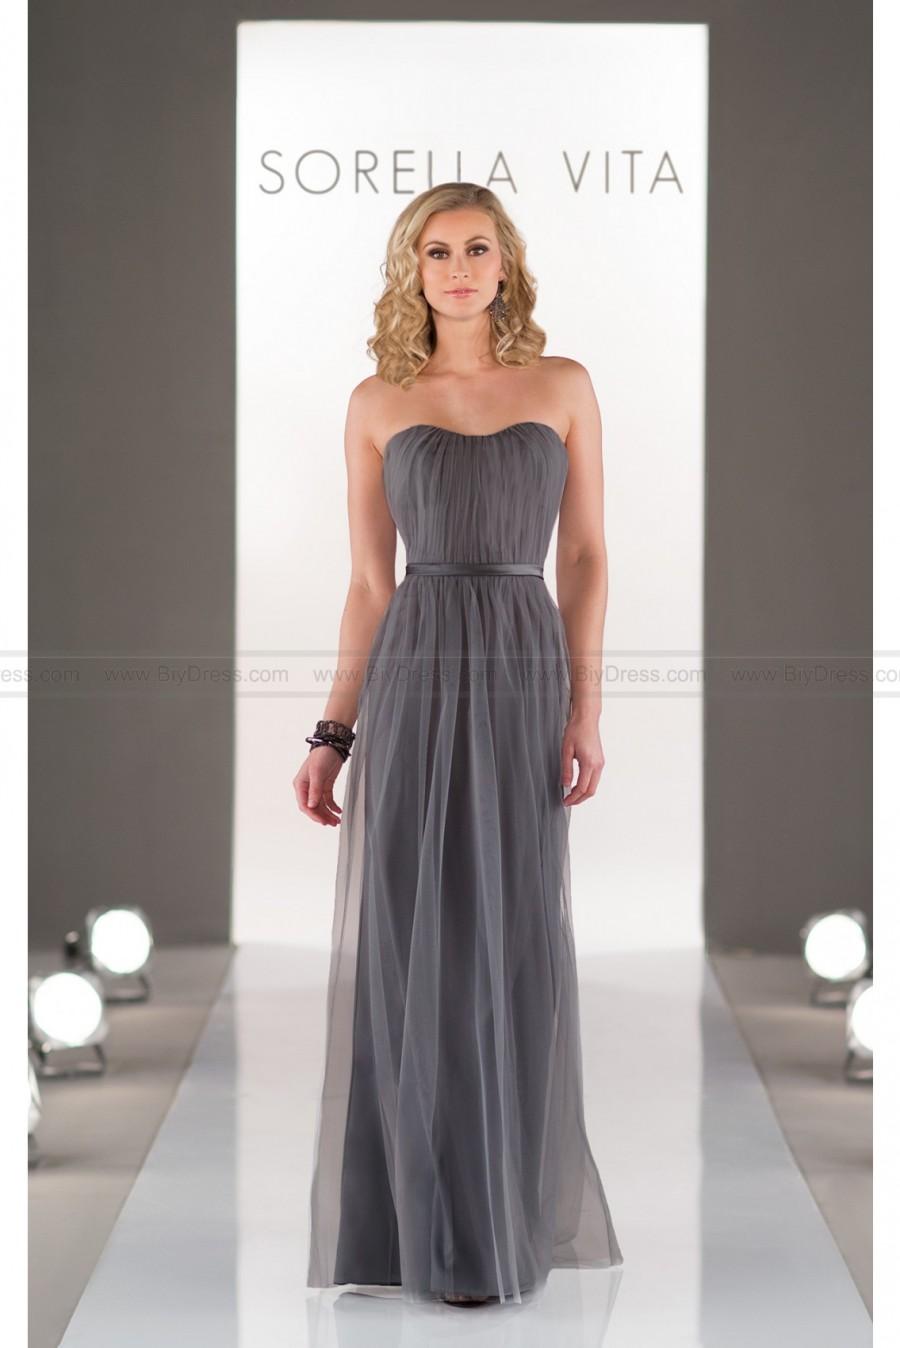 زفاف - Sorella Vita Strapless Floor Length Gown Style 8468